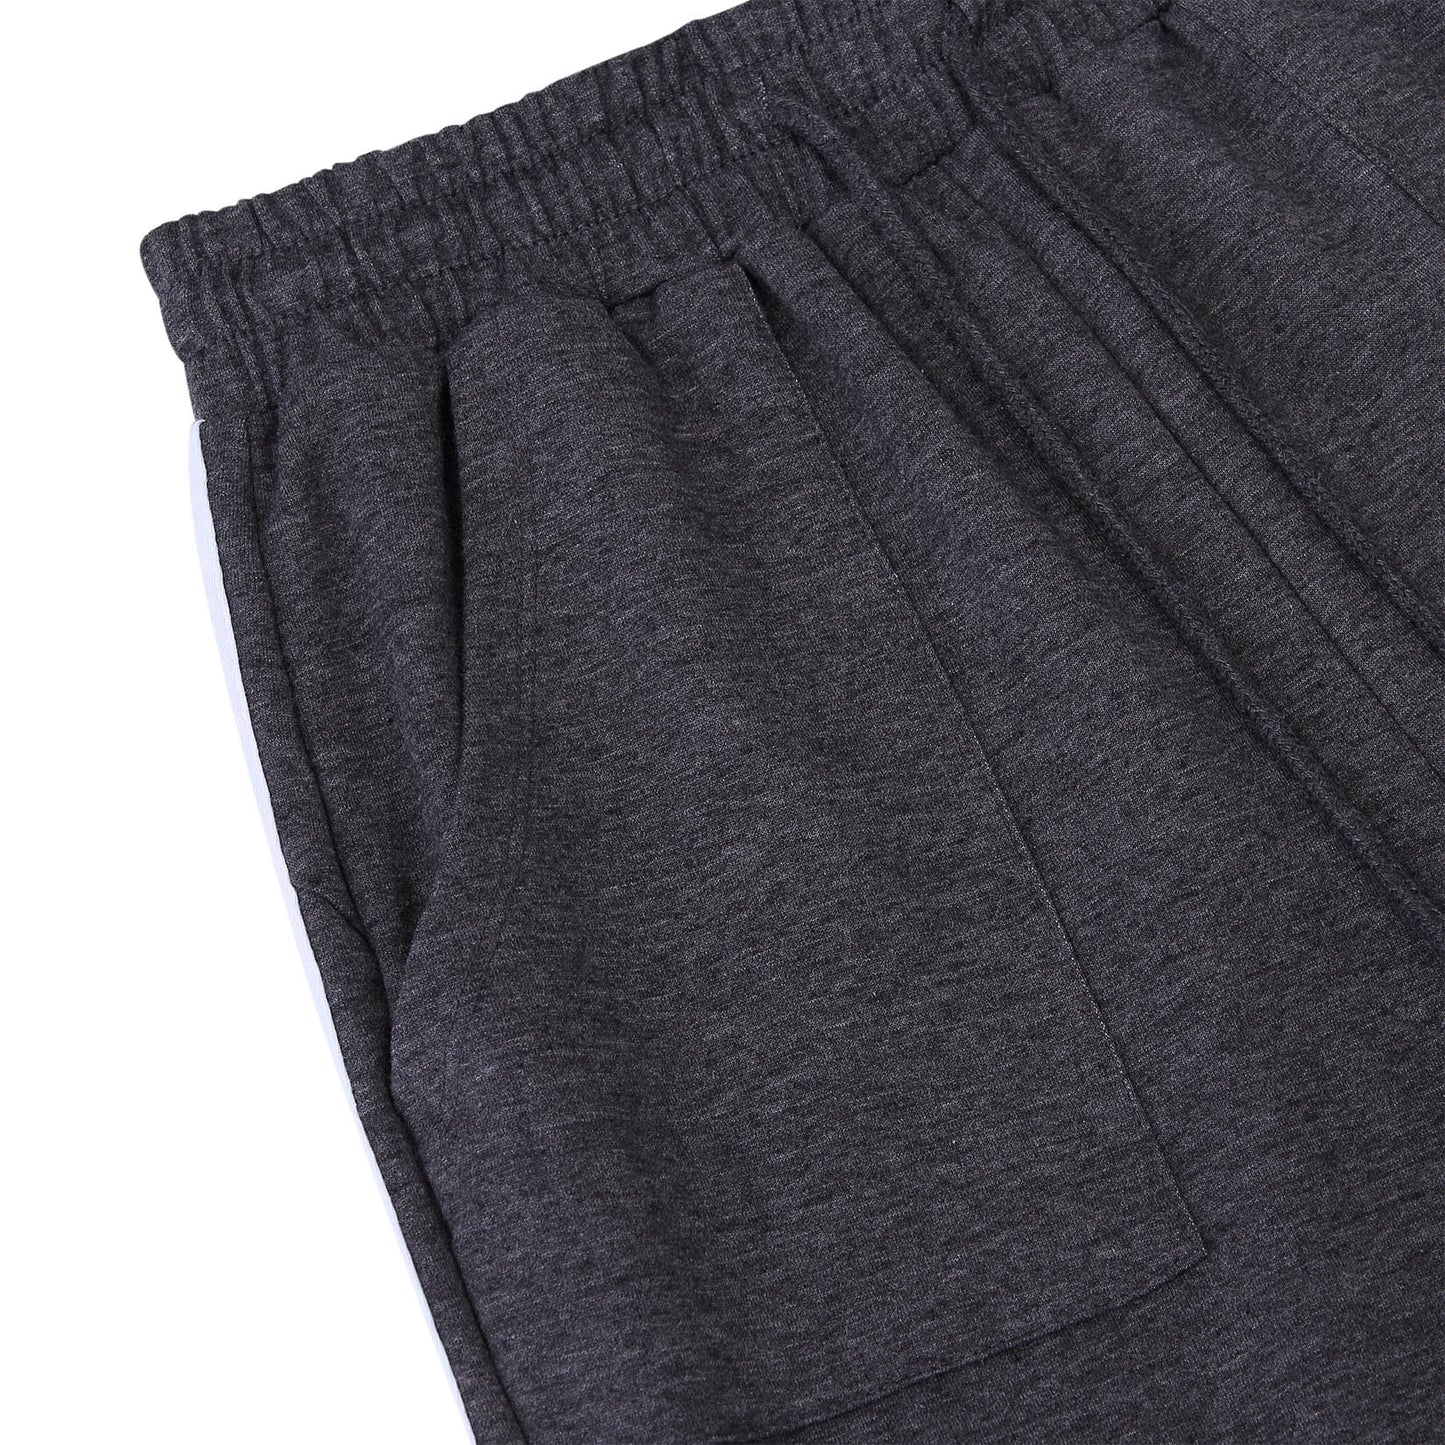 YESFASHION Women's Pockets Casual Sports Pants Grey